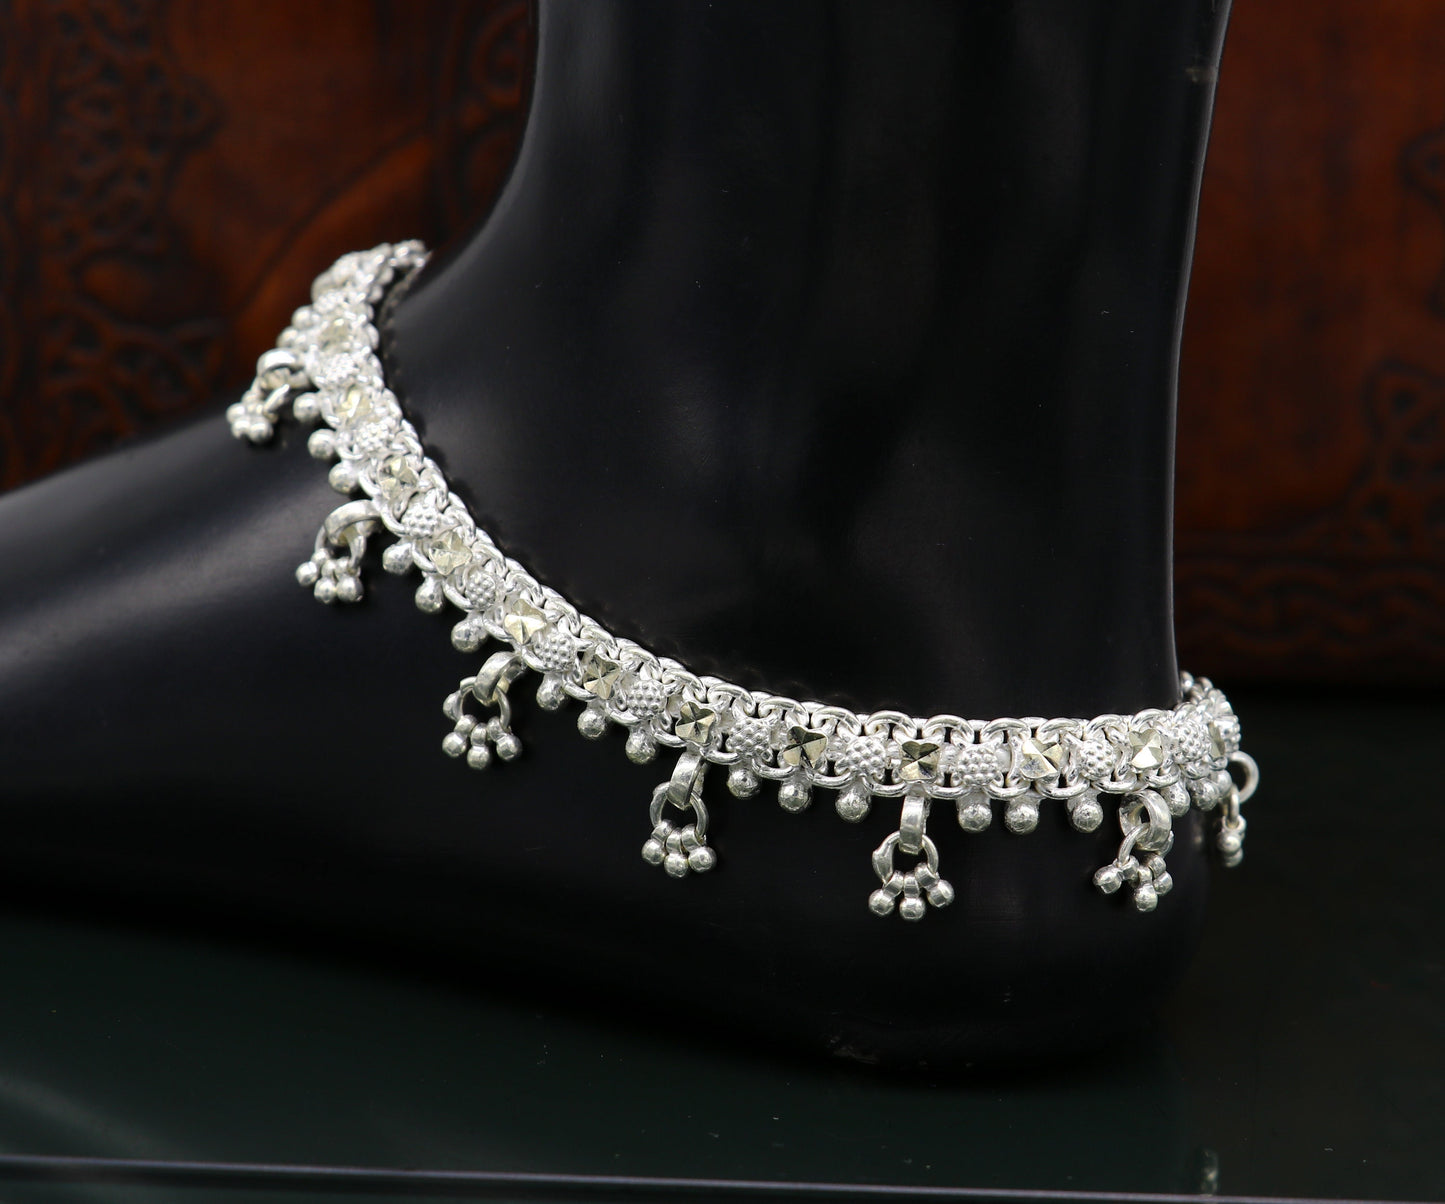 10.5" sterling silver solid customized stylish designer anklet bracelet foot bracelet vintage tribal belly dance wedding jewelry ank378 - TRIBAL ORNAMENTS